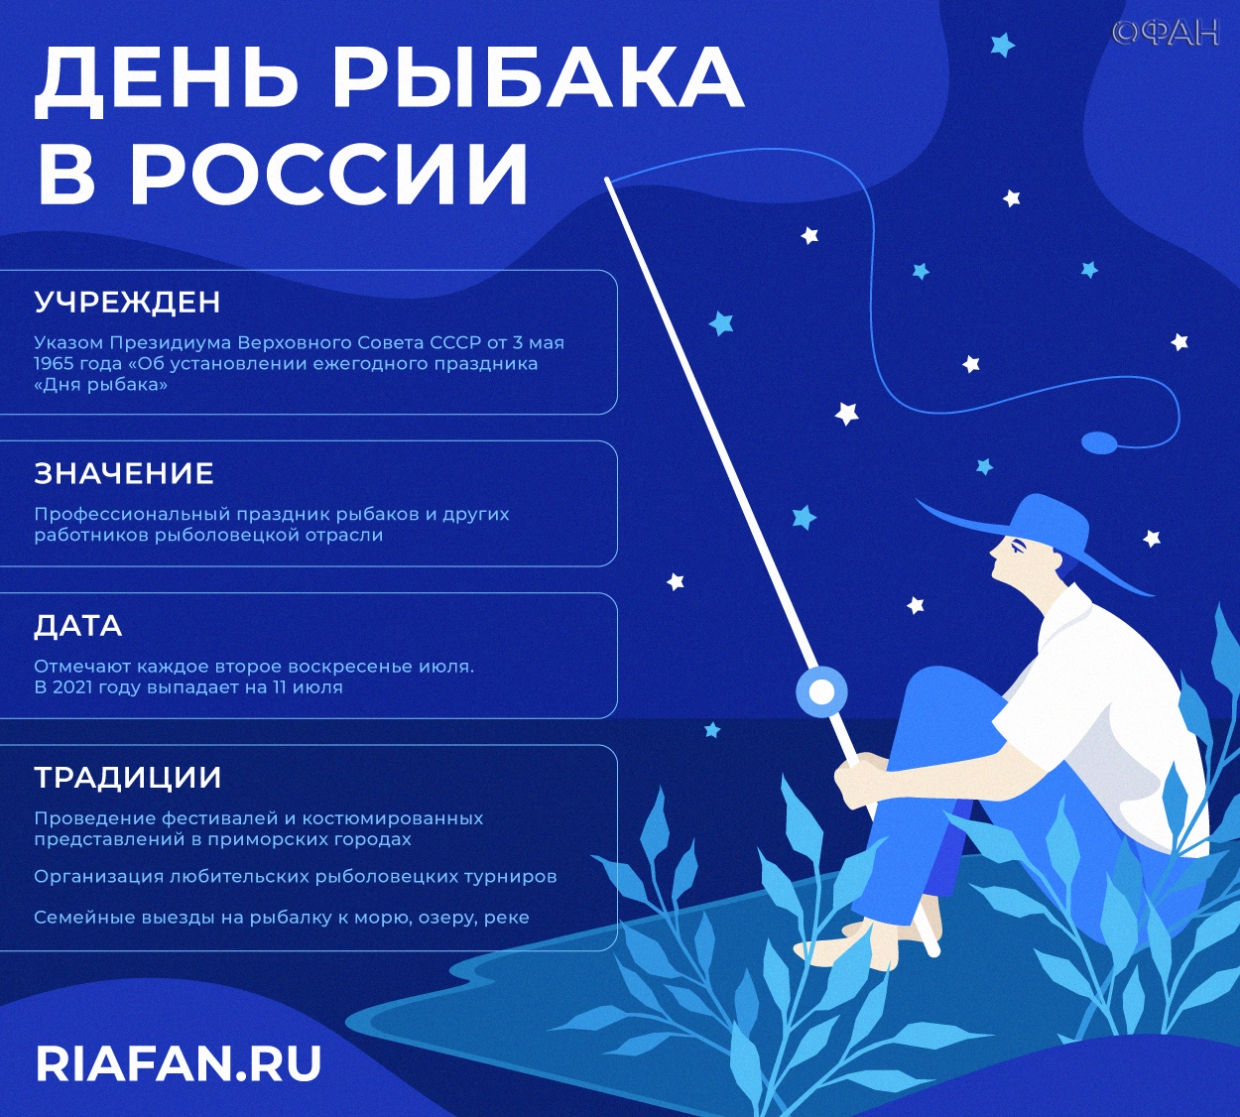 Дата и традиции празднования Дня рыбака в России